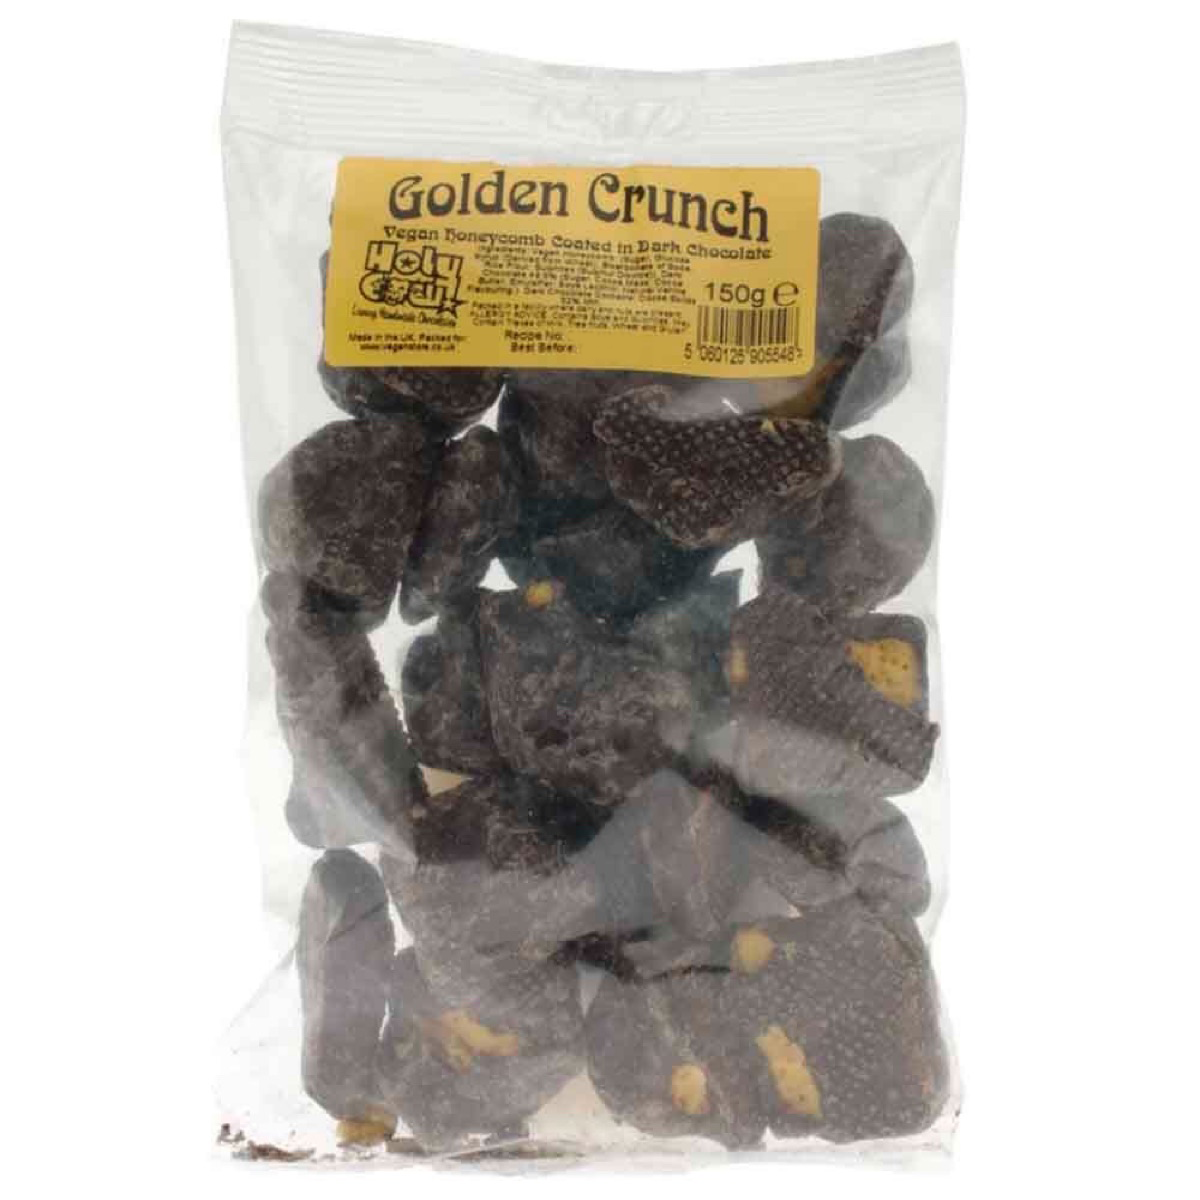 Sealed seethrough plastic bag containing Golden Crunch Vegan Honeycomb Coated in Dark Chocolate